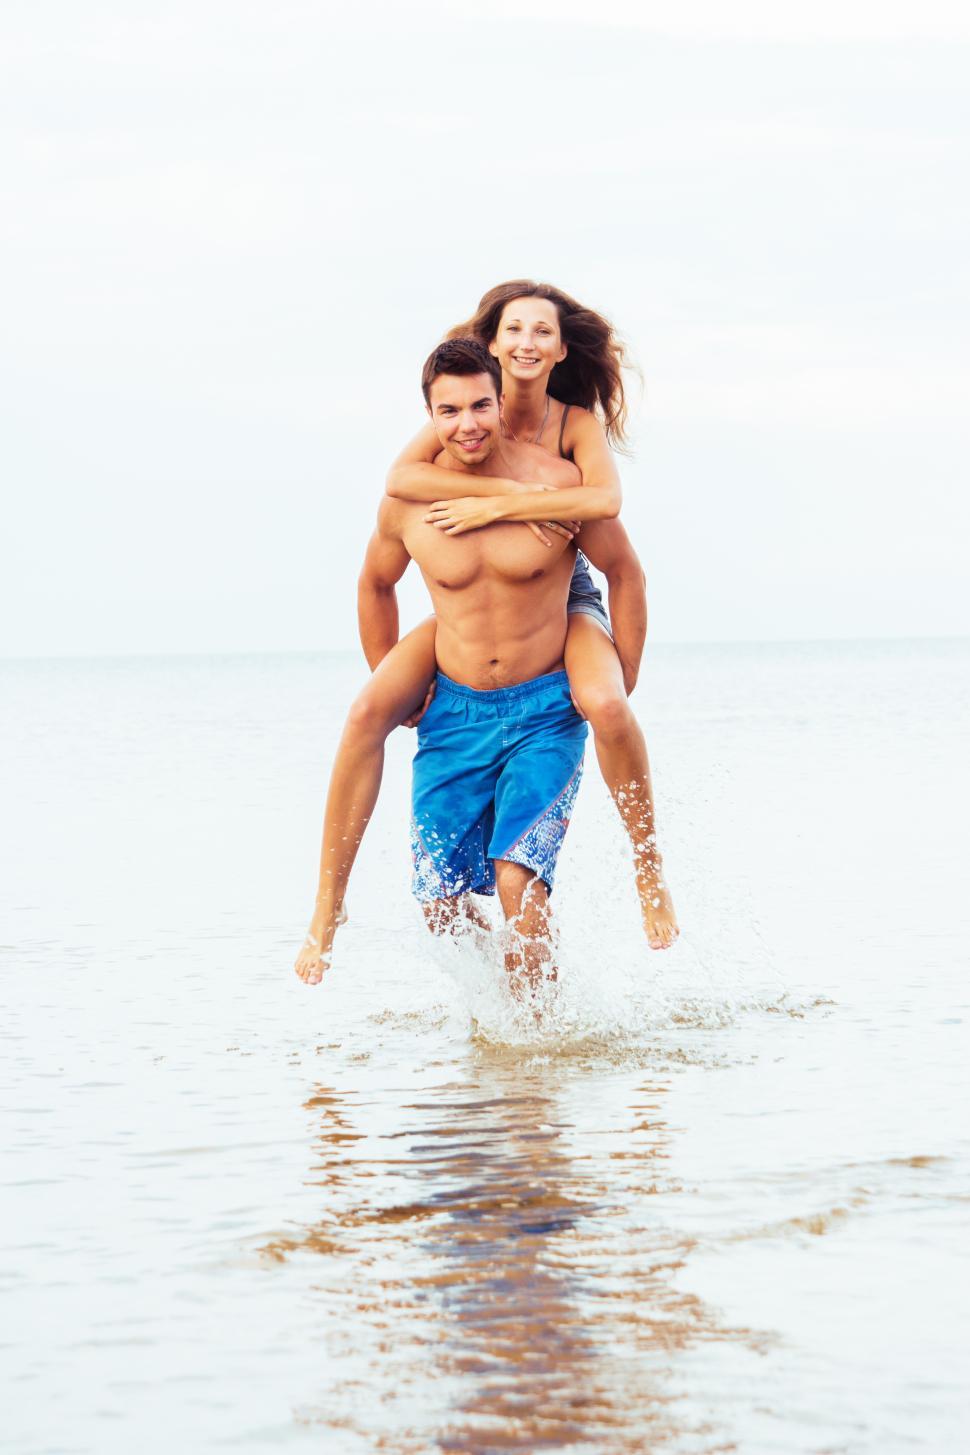 Download Free Stock Photo of Couple enjoying the beach 